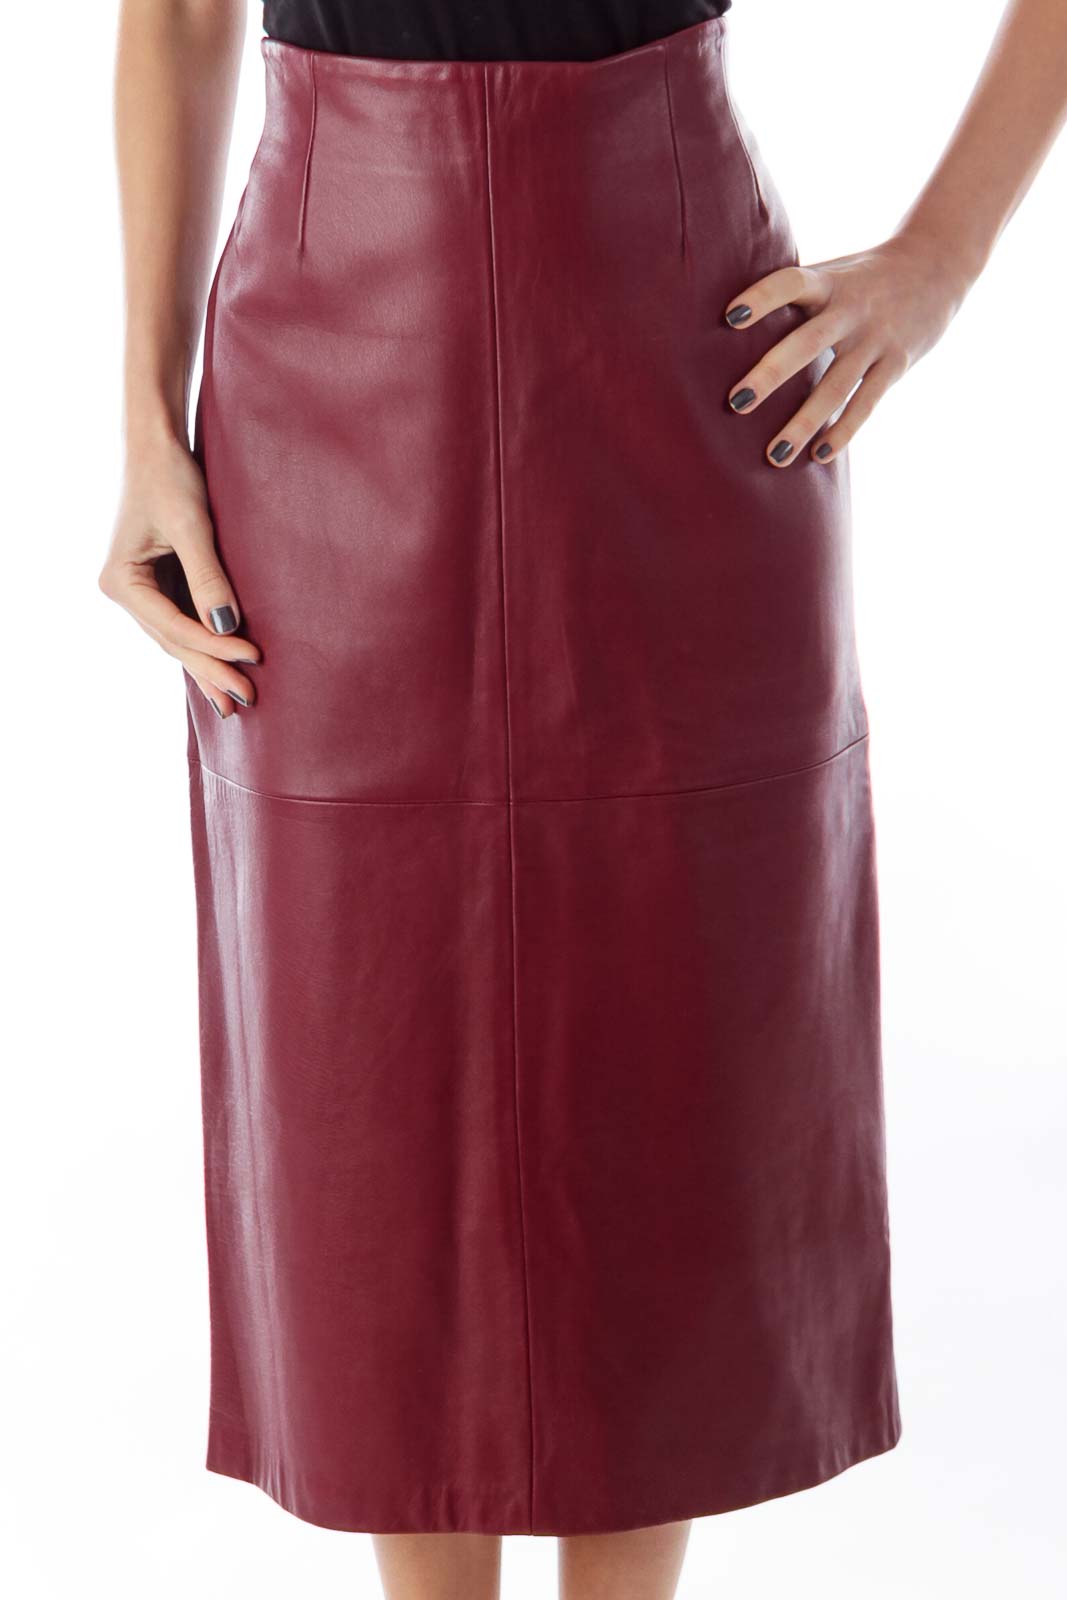 Burgundy Midi Leather Skirt Front